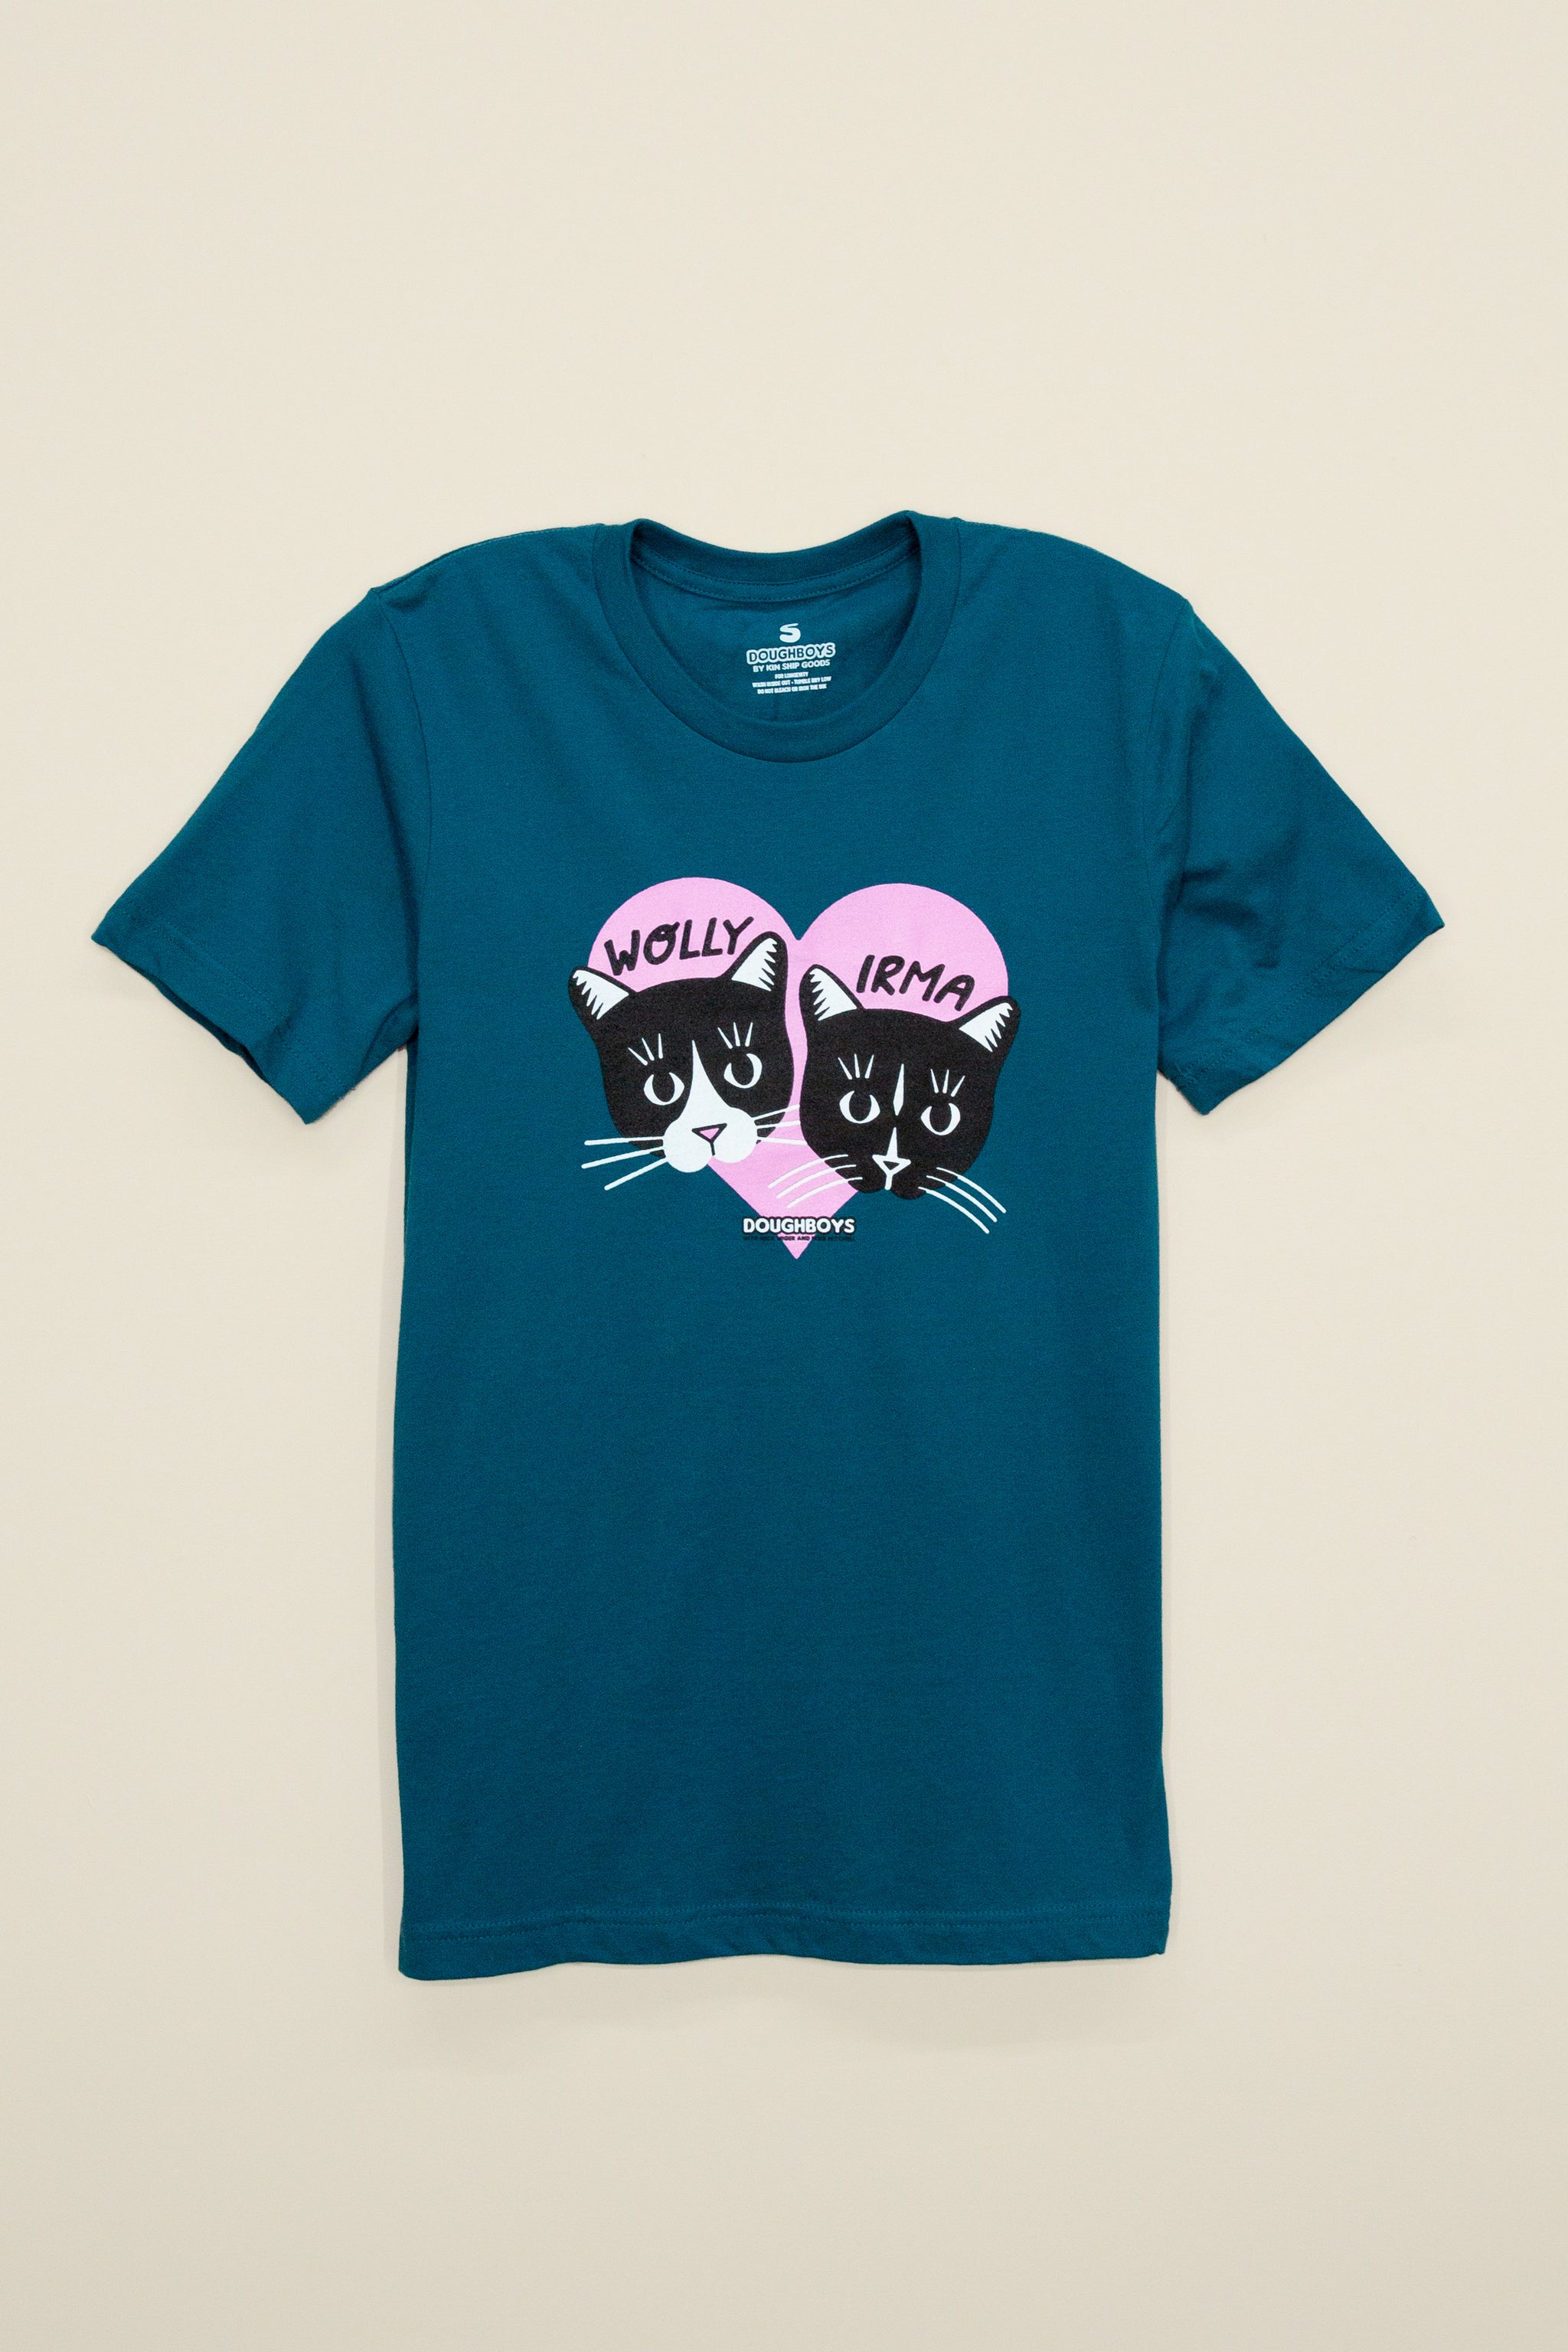 Wolly & Irma T-shirt - Official Doughboys Podcast Merch - Kin Ship Goods